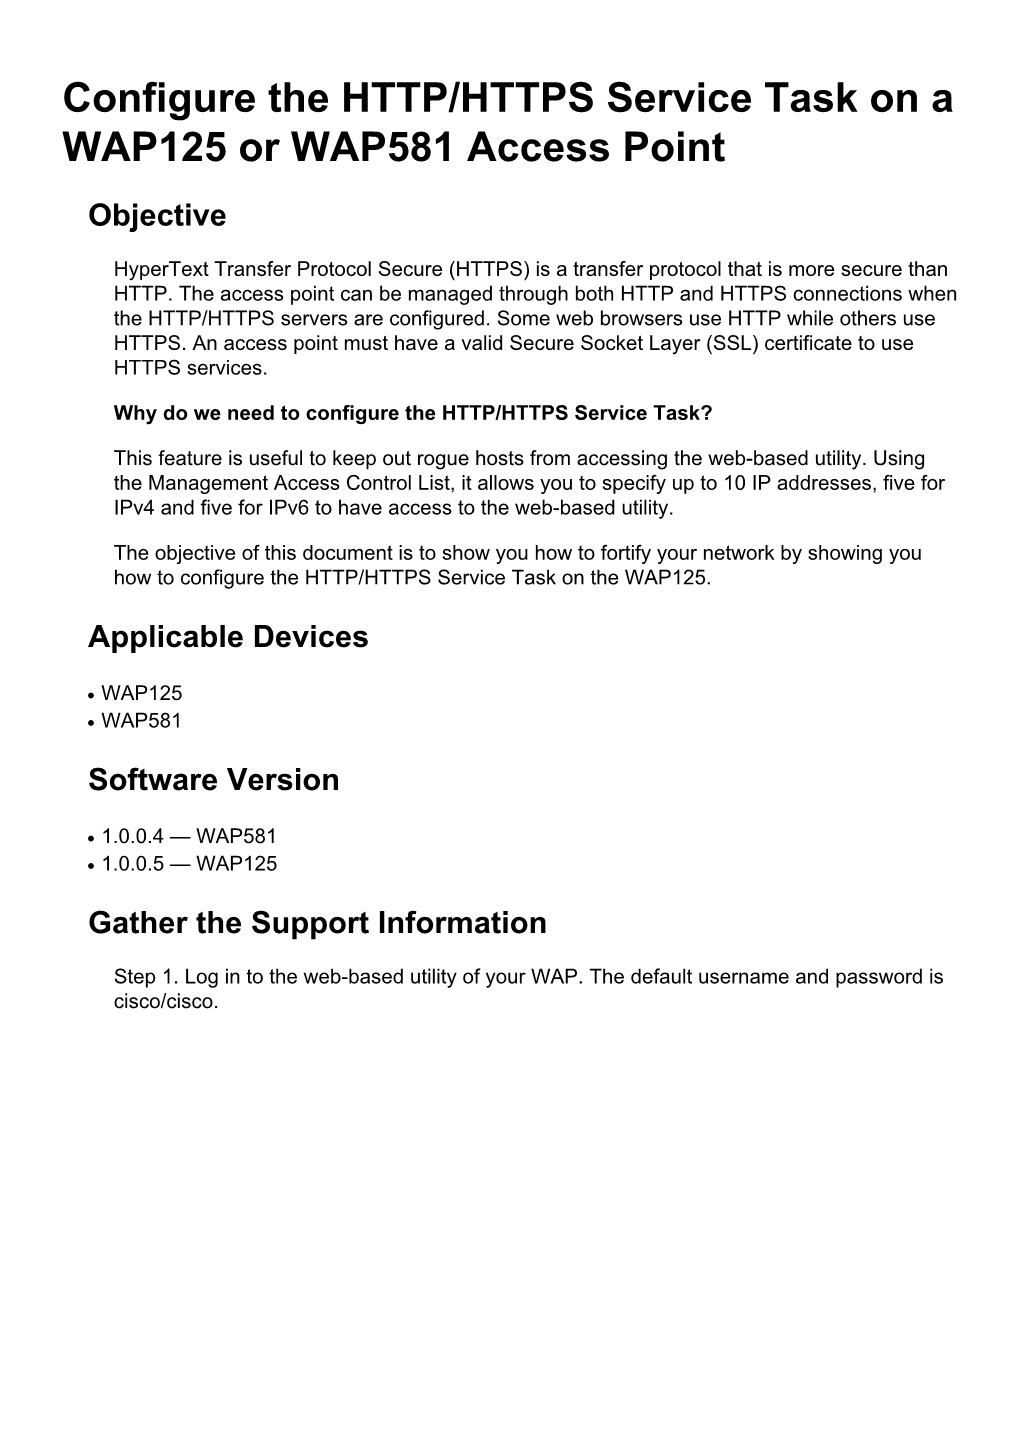 Configure the HTTP/HTTPS Service Task on a WAP125 Or WAP581 Access Point